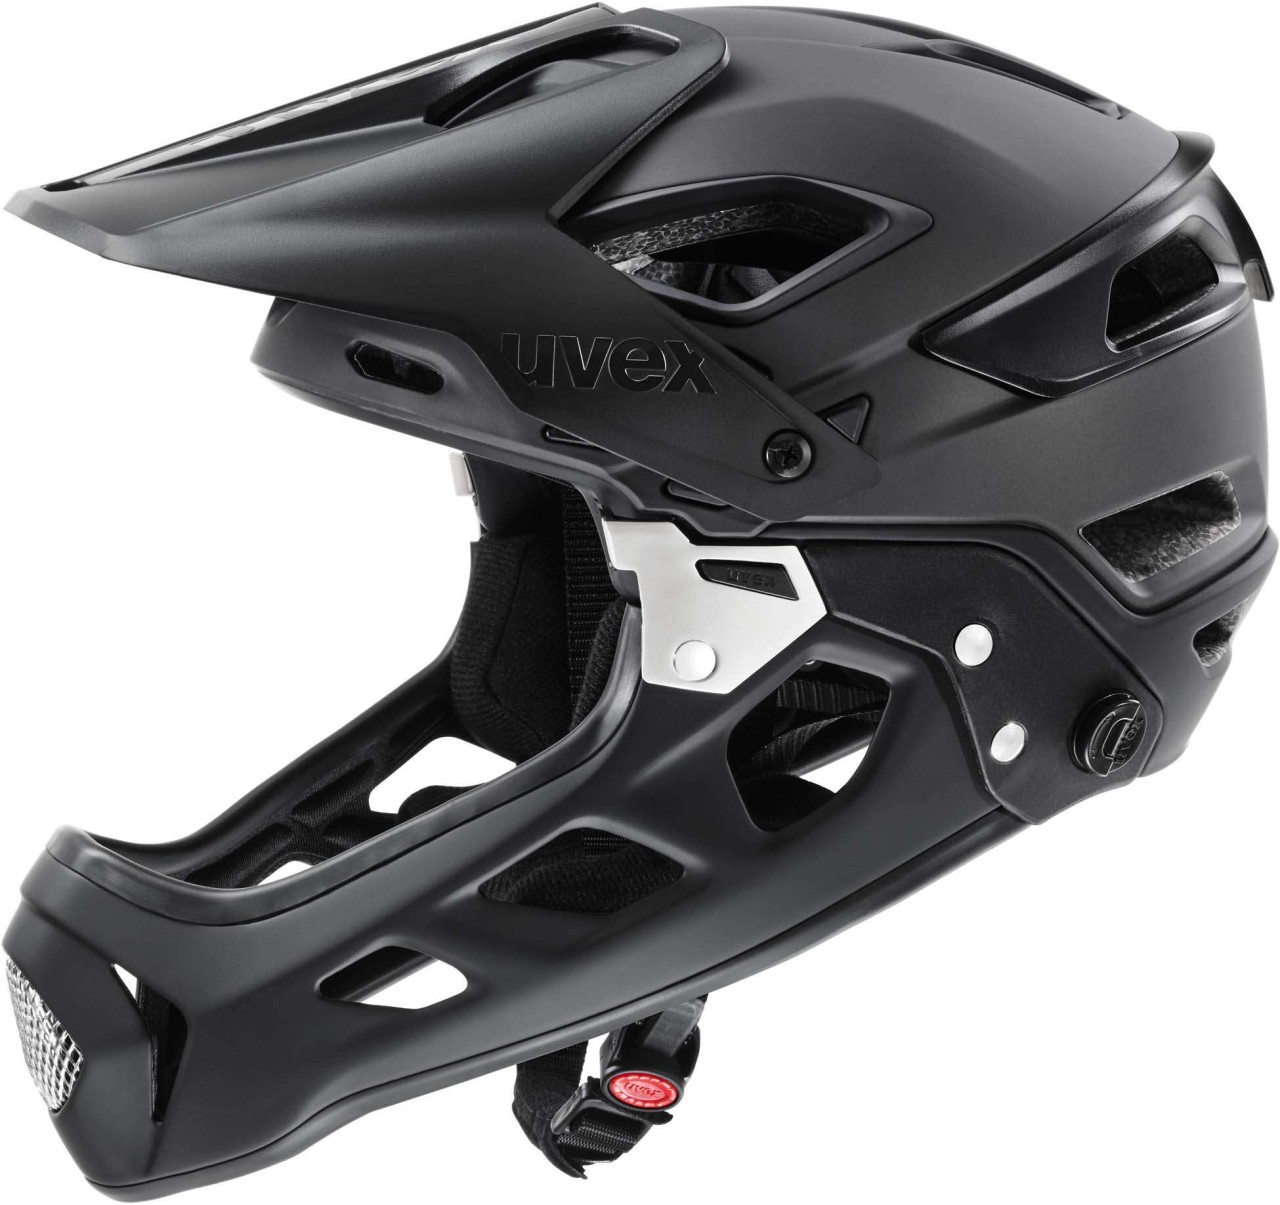 Uvex jakkyl hde 2.0 - Fullface Helm